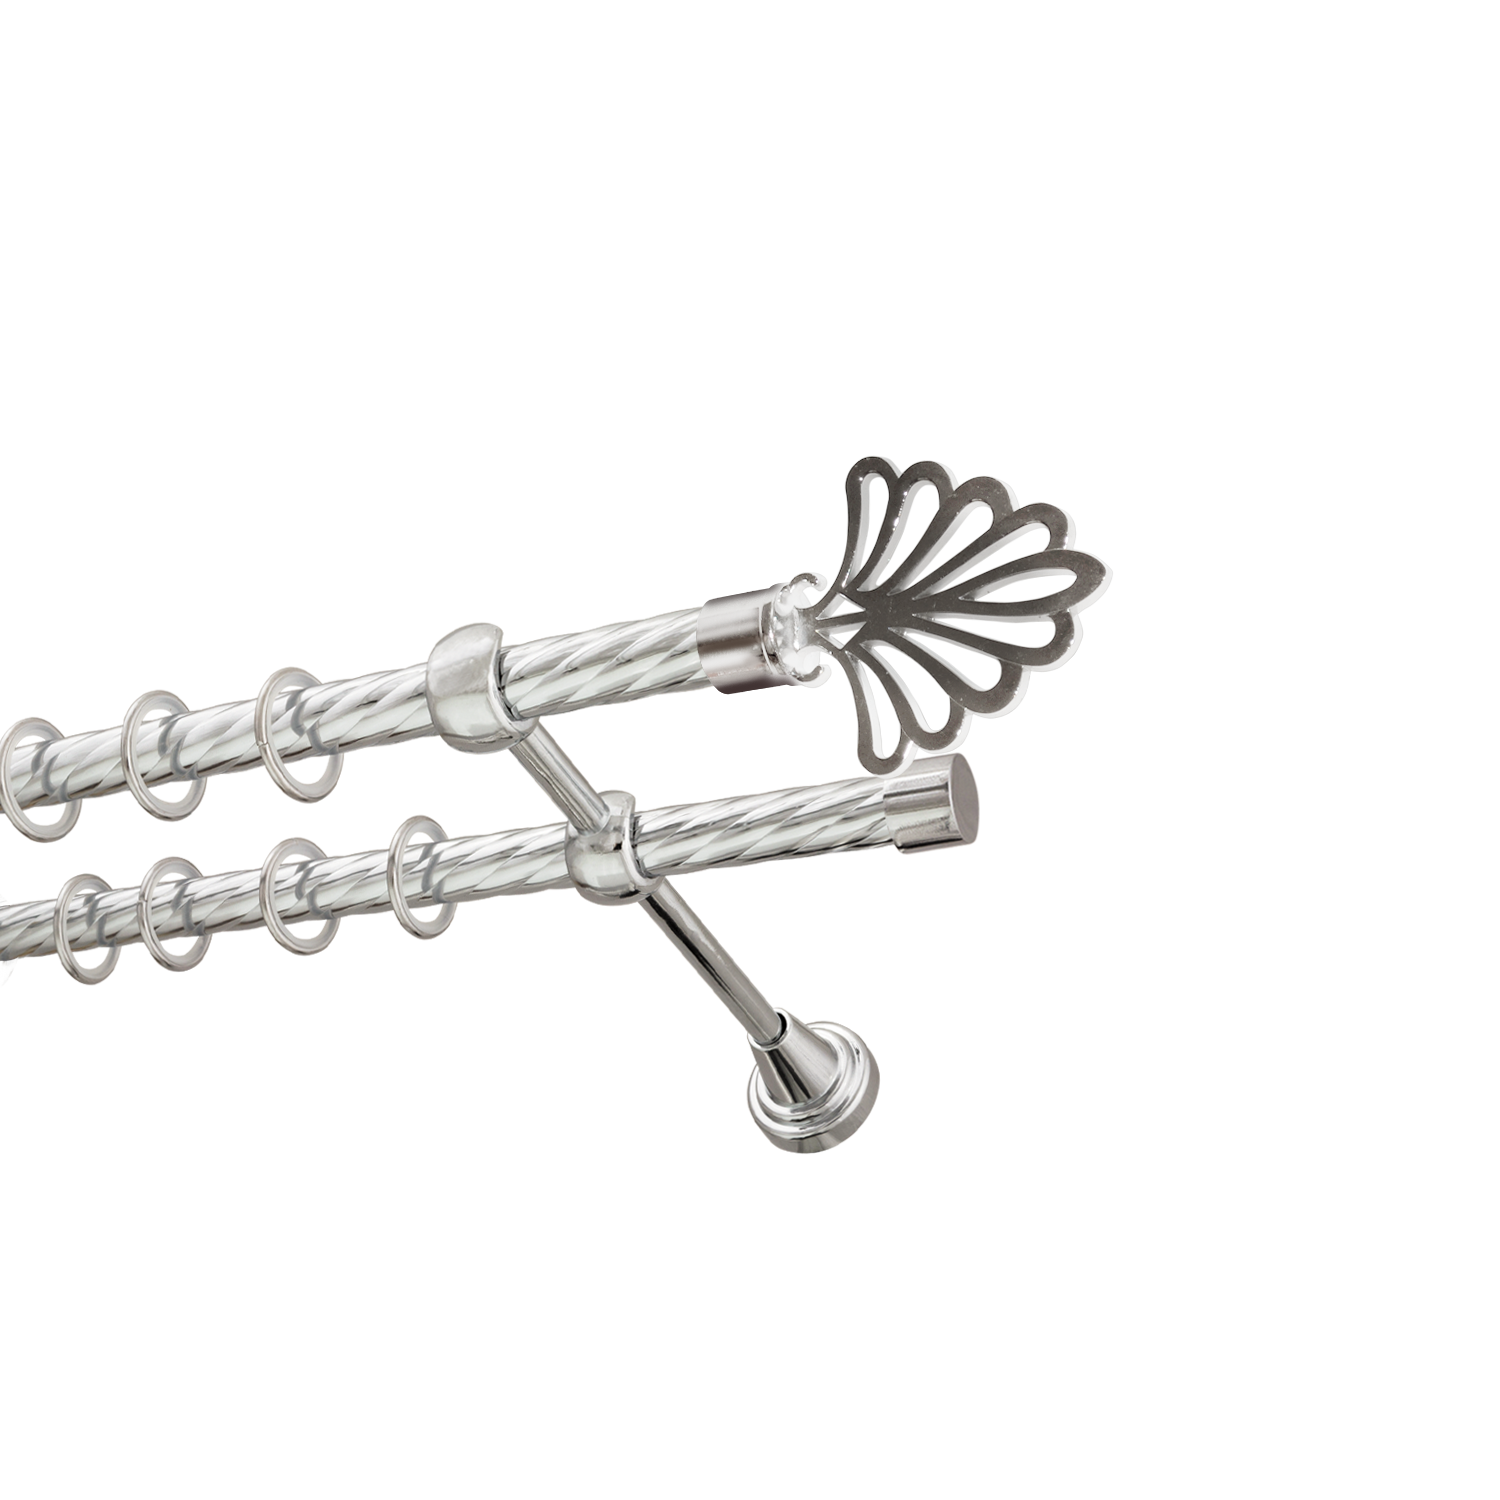 Металлический карниз для штор Бутик, двухрядный 16/16 мм, серебро, витая штанга, длина 160 см - фото Wikidecor.ru